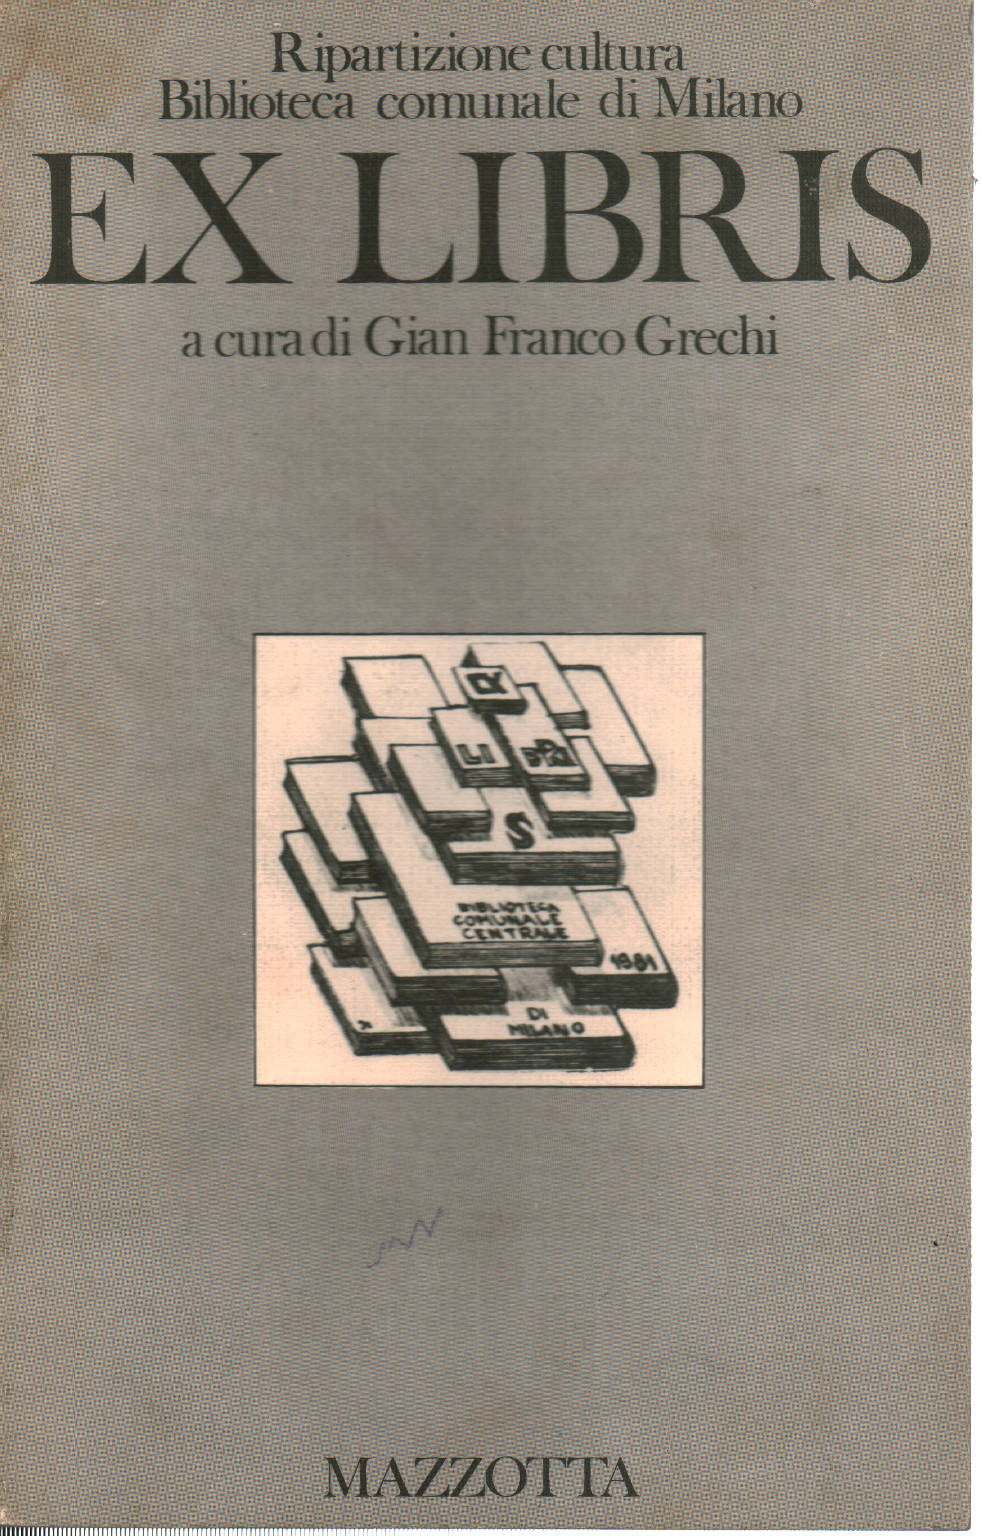 Ex libris, Gian Franco Griechen